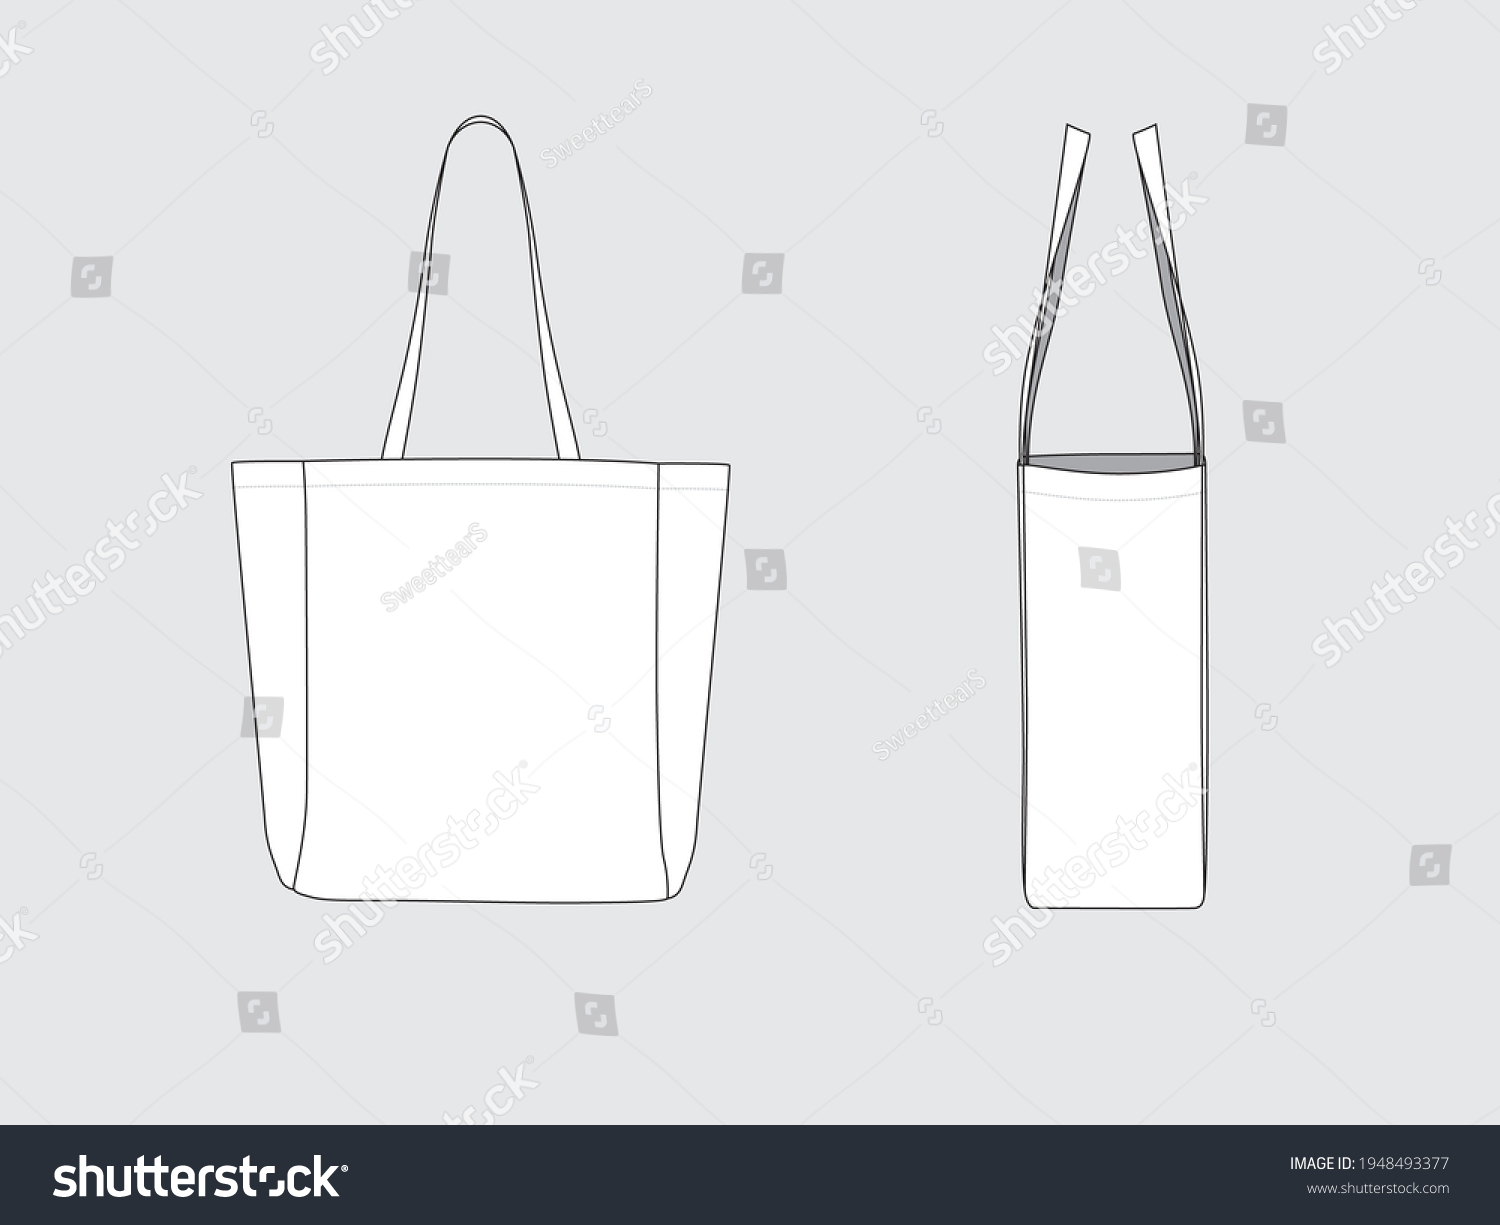 1,229 Bag Side Pocket Images, Stock Photos & Vectors | Shutterstock